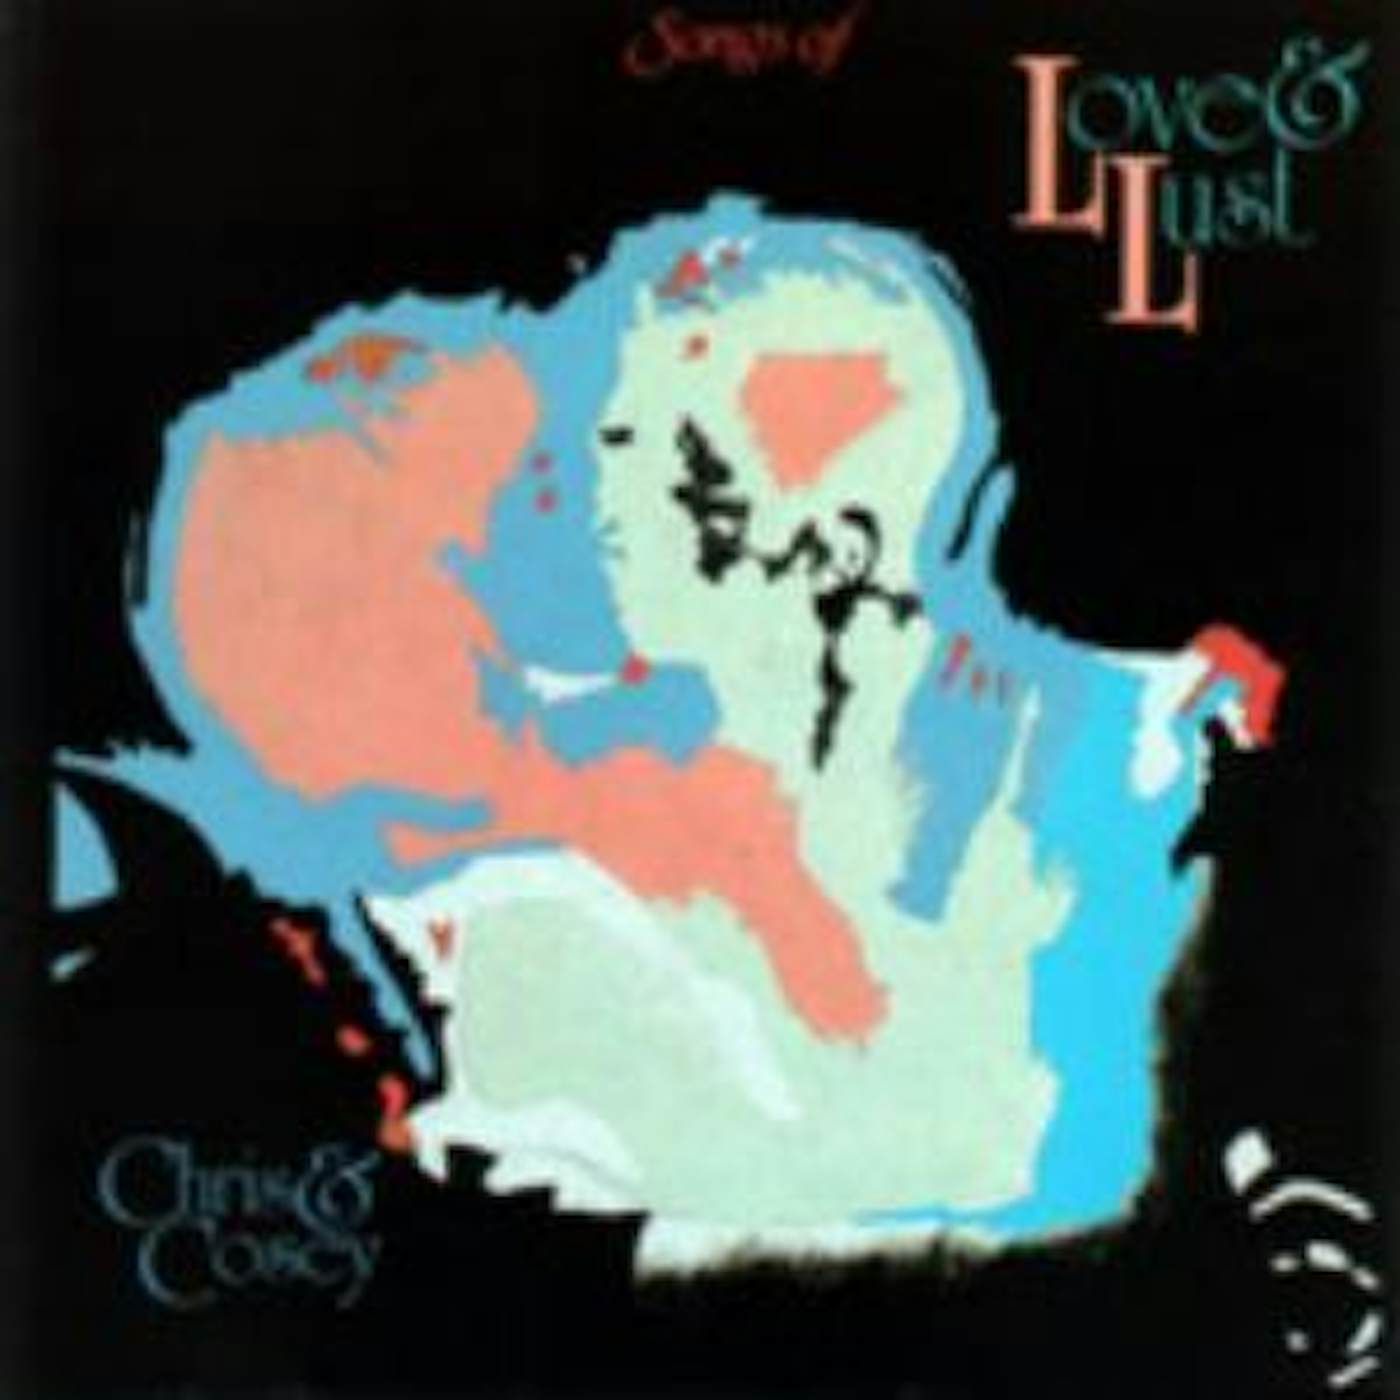 Chris & Cosey 'Songs Of Love & Lust' Vinyl LP - Turquoise Vinyl Record